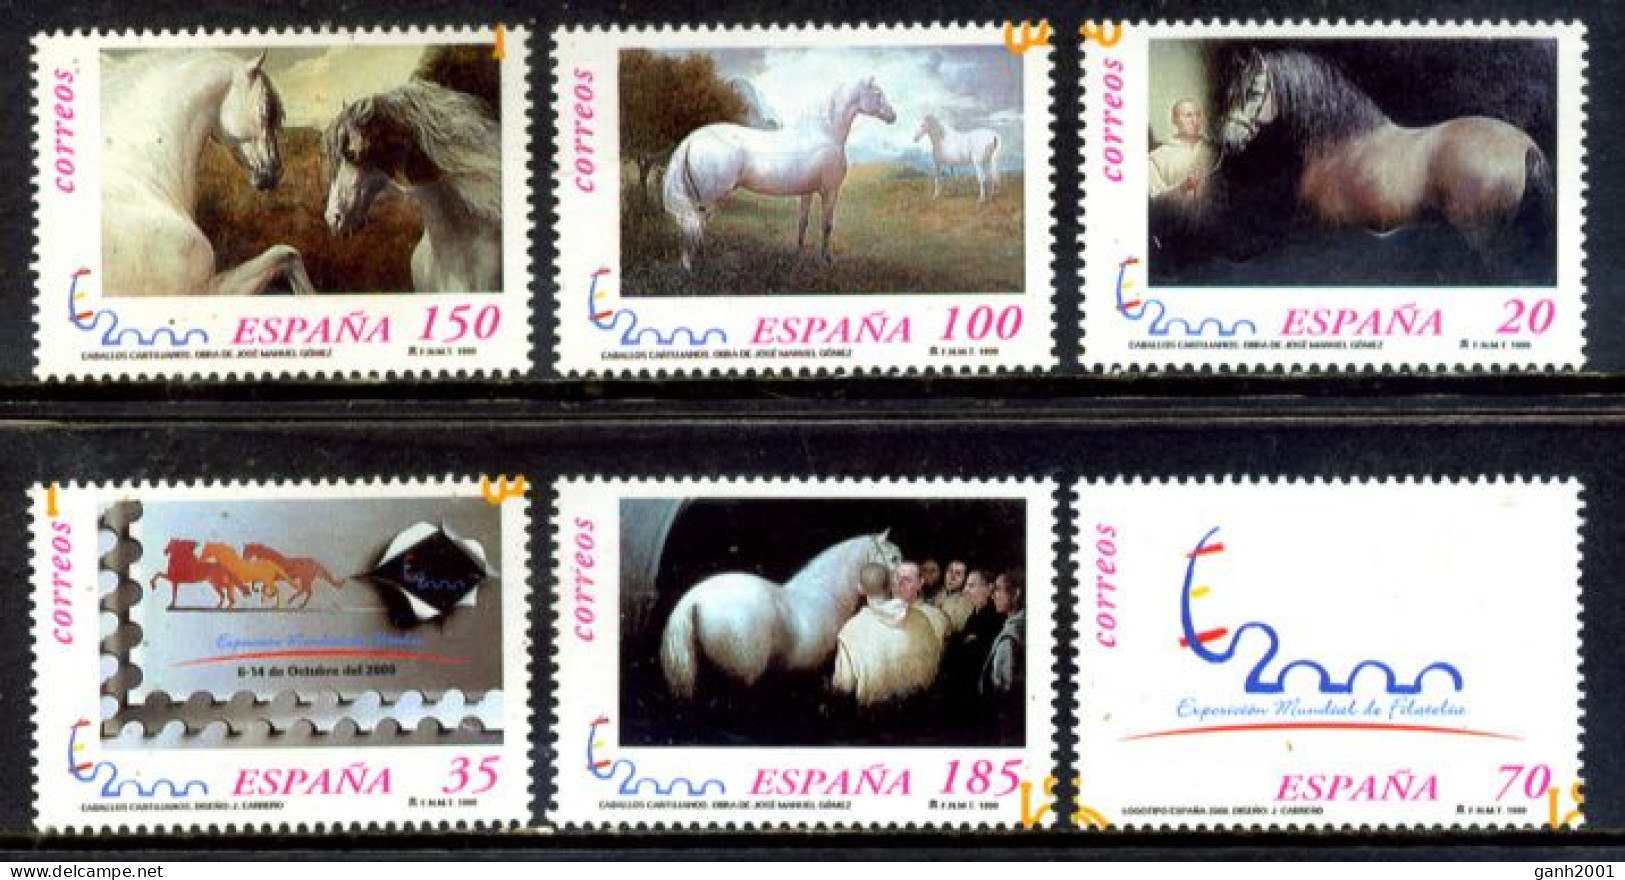 Spain 1999 España / Mammals Horses MNH Caballos Säugetiere Chevaux / Hb19  34-6 - Caballos